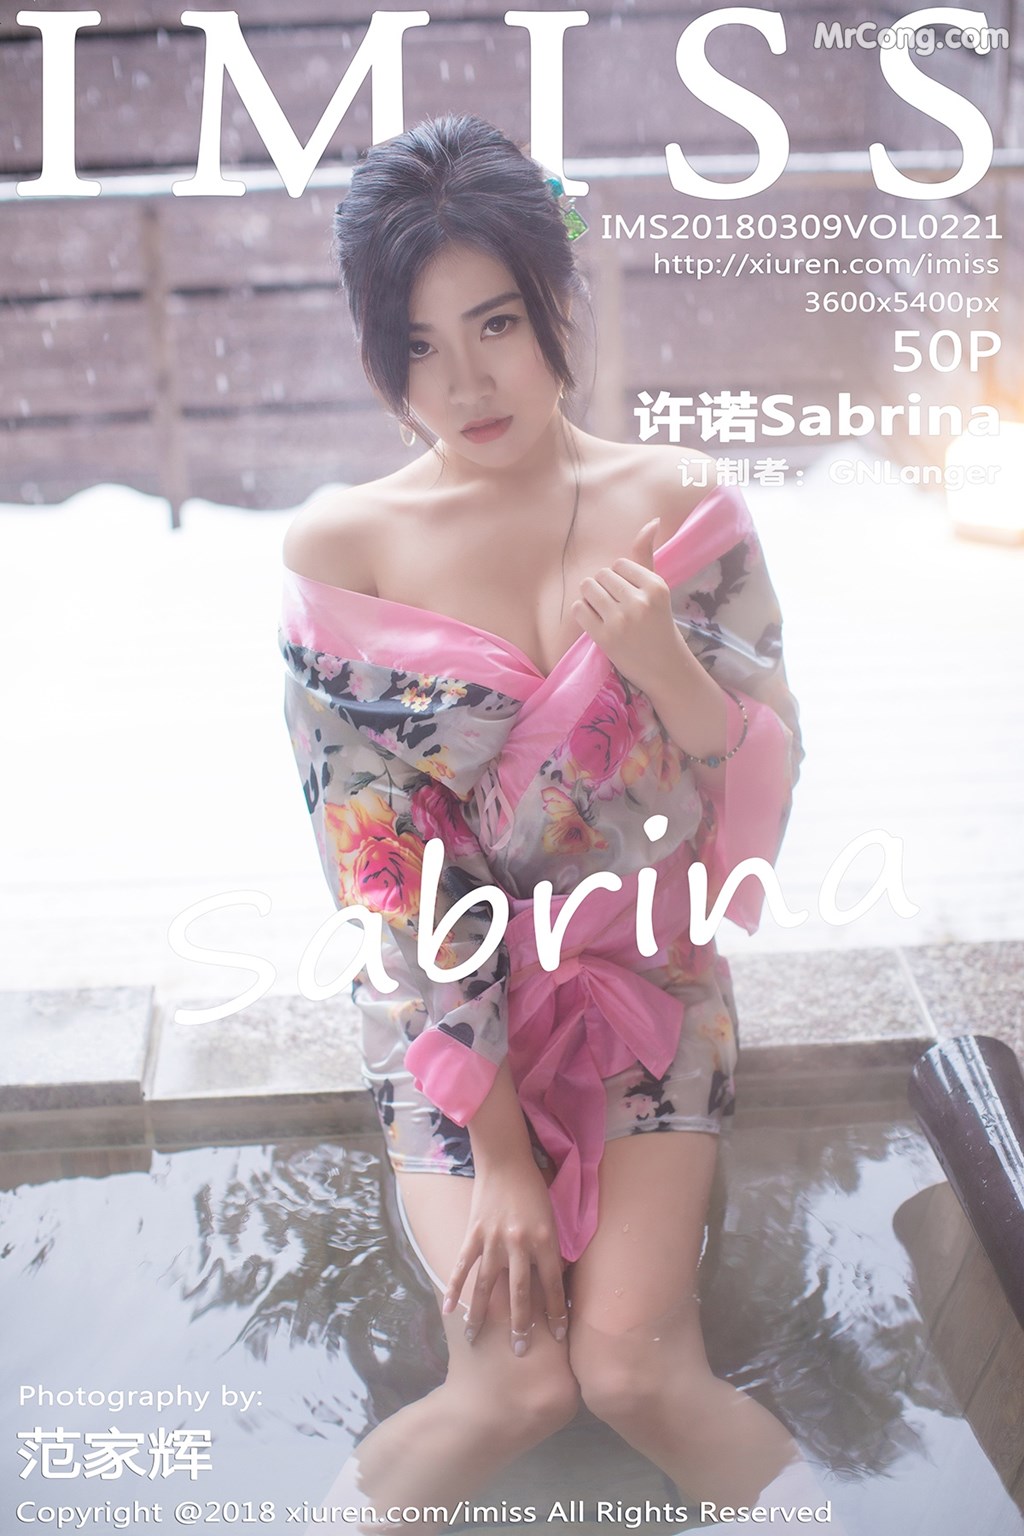 IMISS Vol. 2121: Model Sabrina (许诺) (51 pictures)